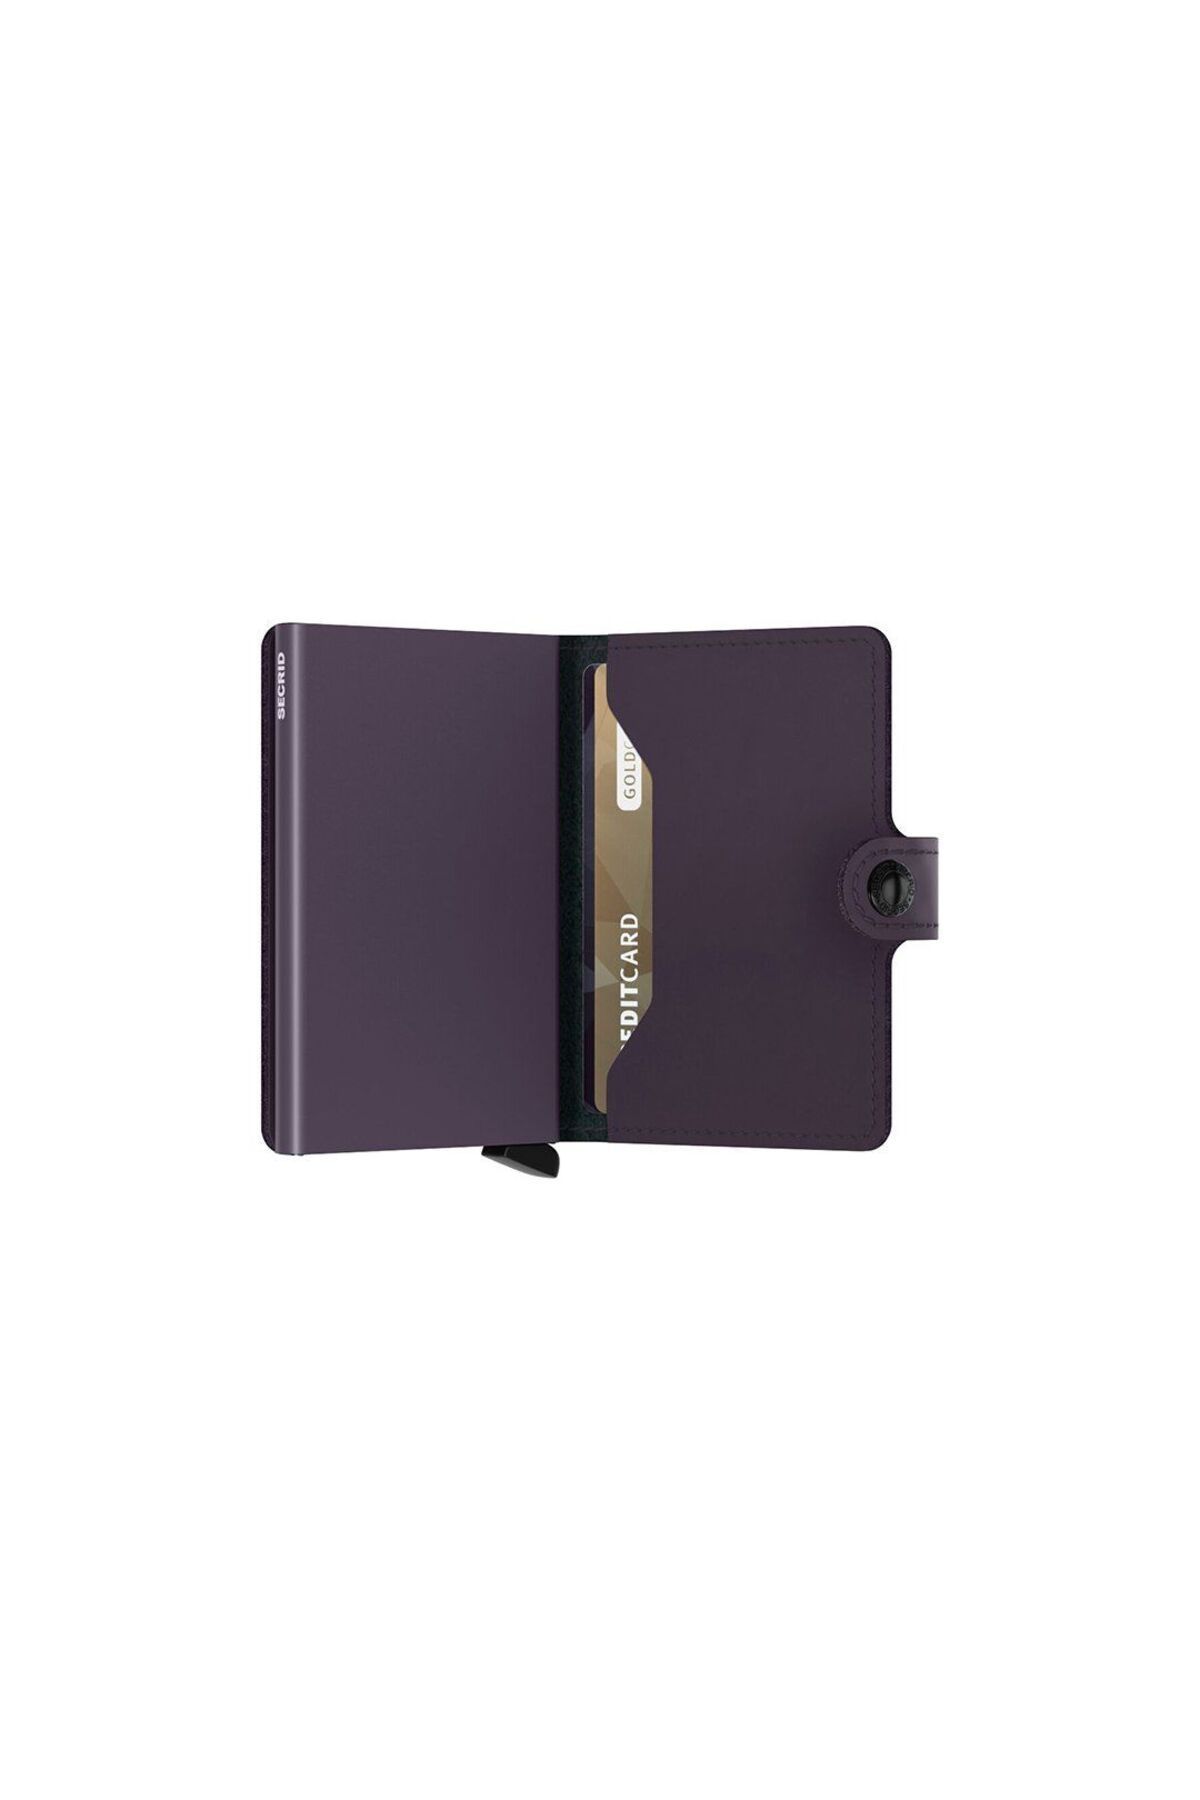 Secrid Miniwallet Matte Dark Purple - Mat Koyu/Mor %100 Orjinal Avrupa Derisi Cüzdan